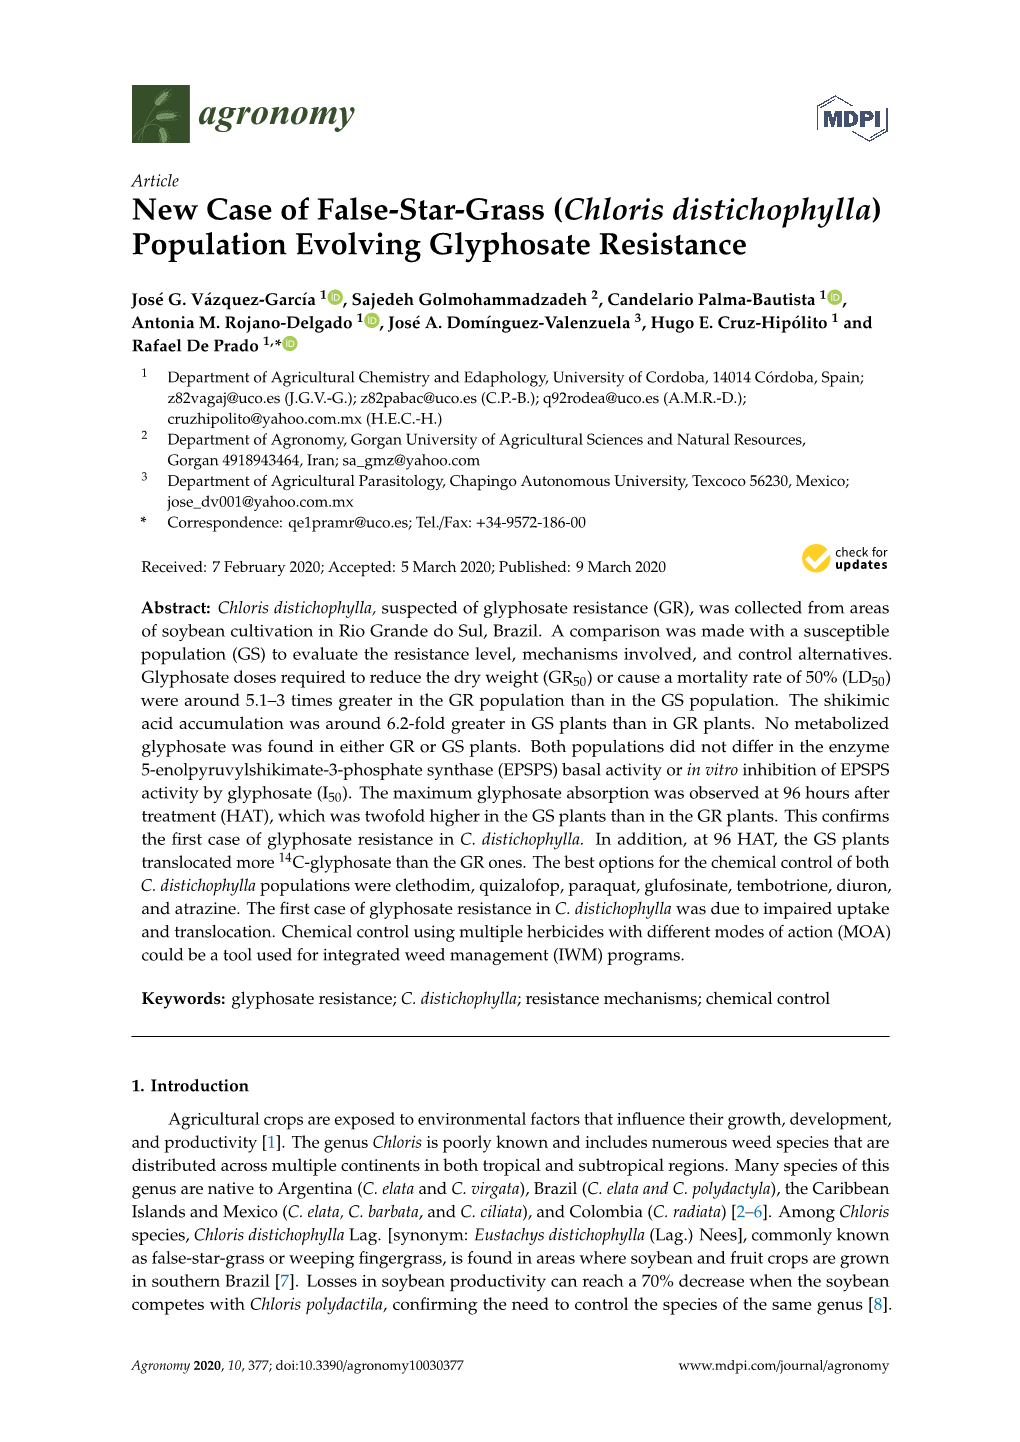 New Case of False-Star-Grass (Chloris Distichophylla) Population Evolving Glyphosate Resistance